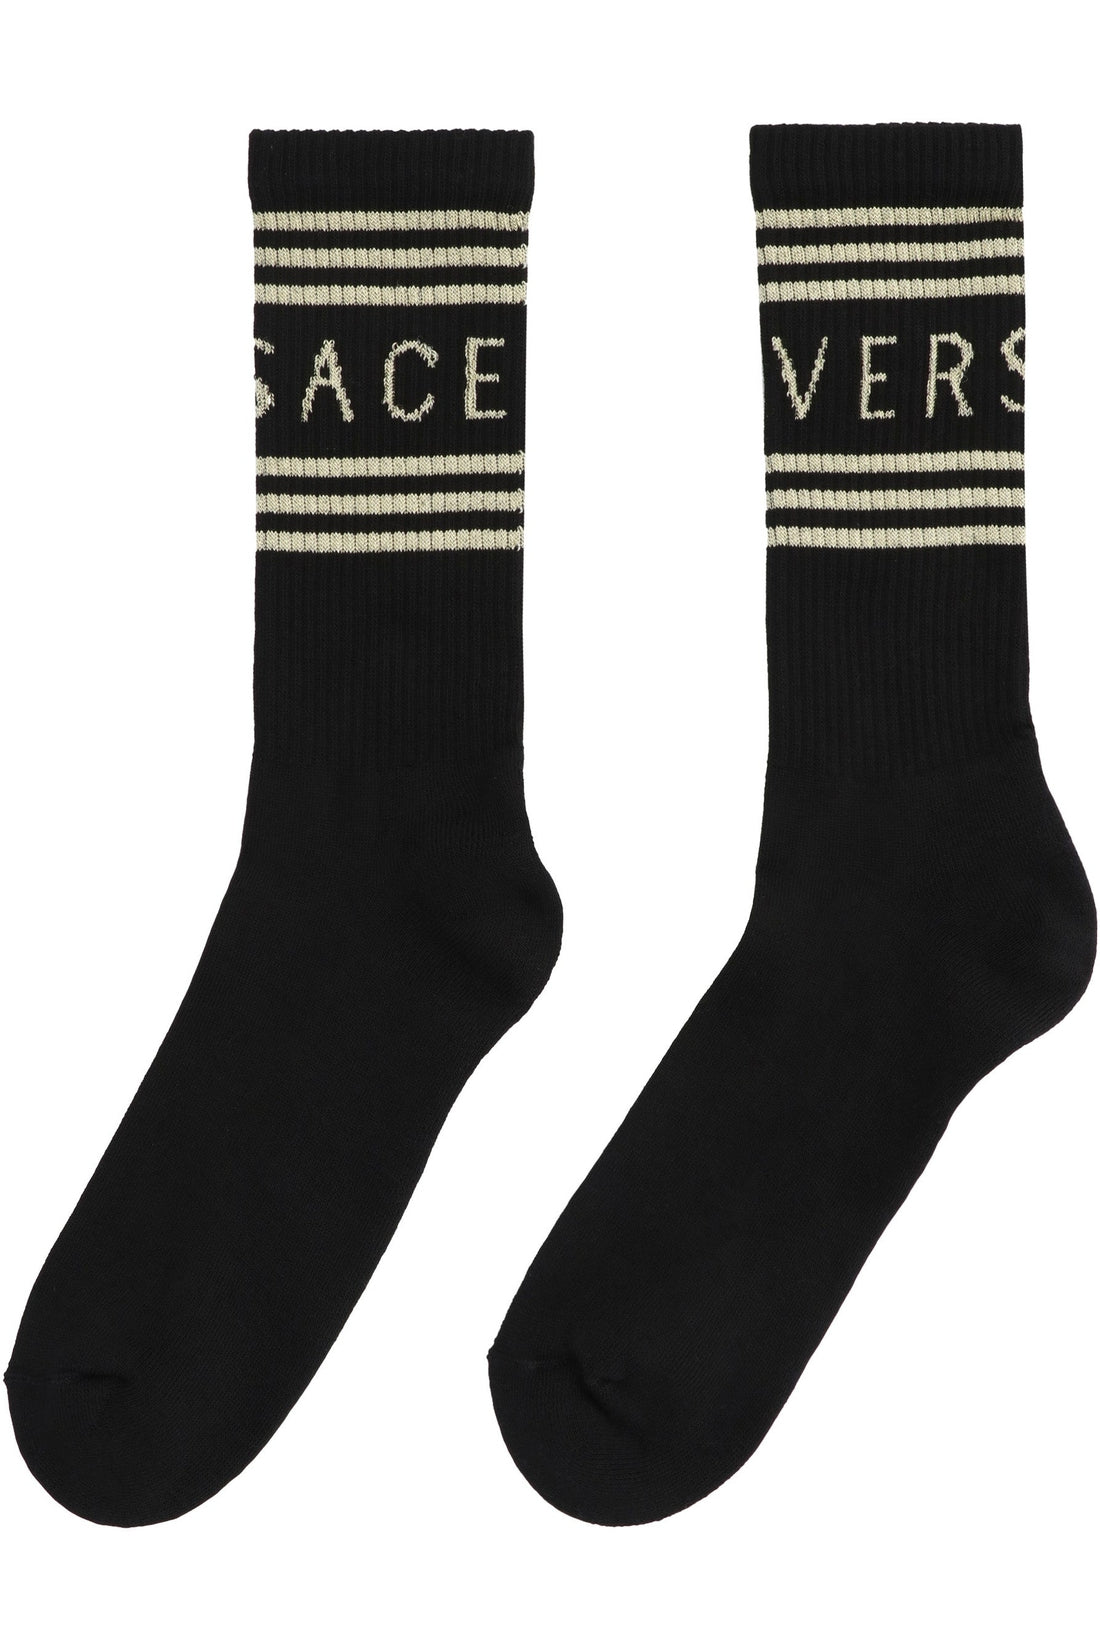 Versace-OUTLET-SALE-Cotton socks with logo-ARCHIVIST